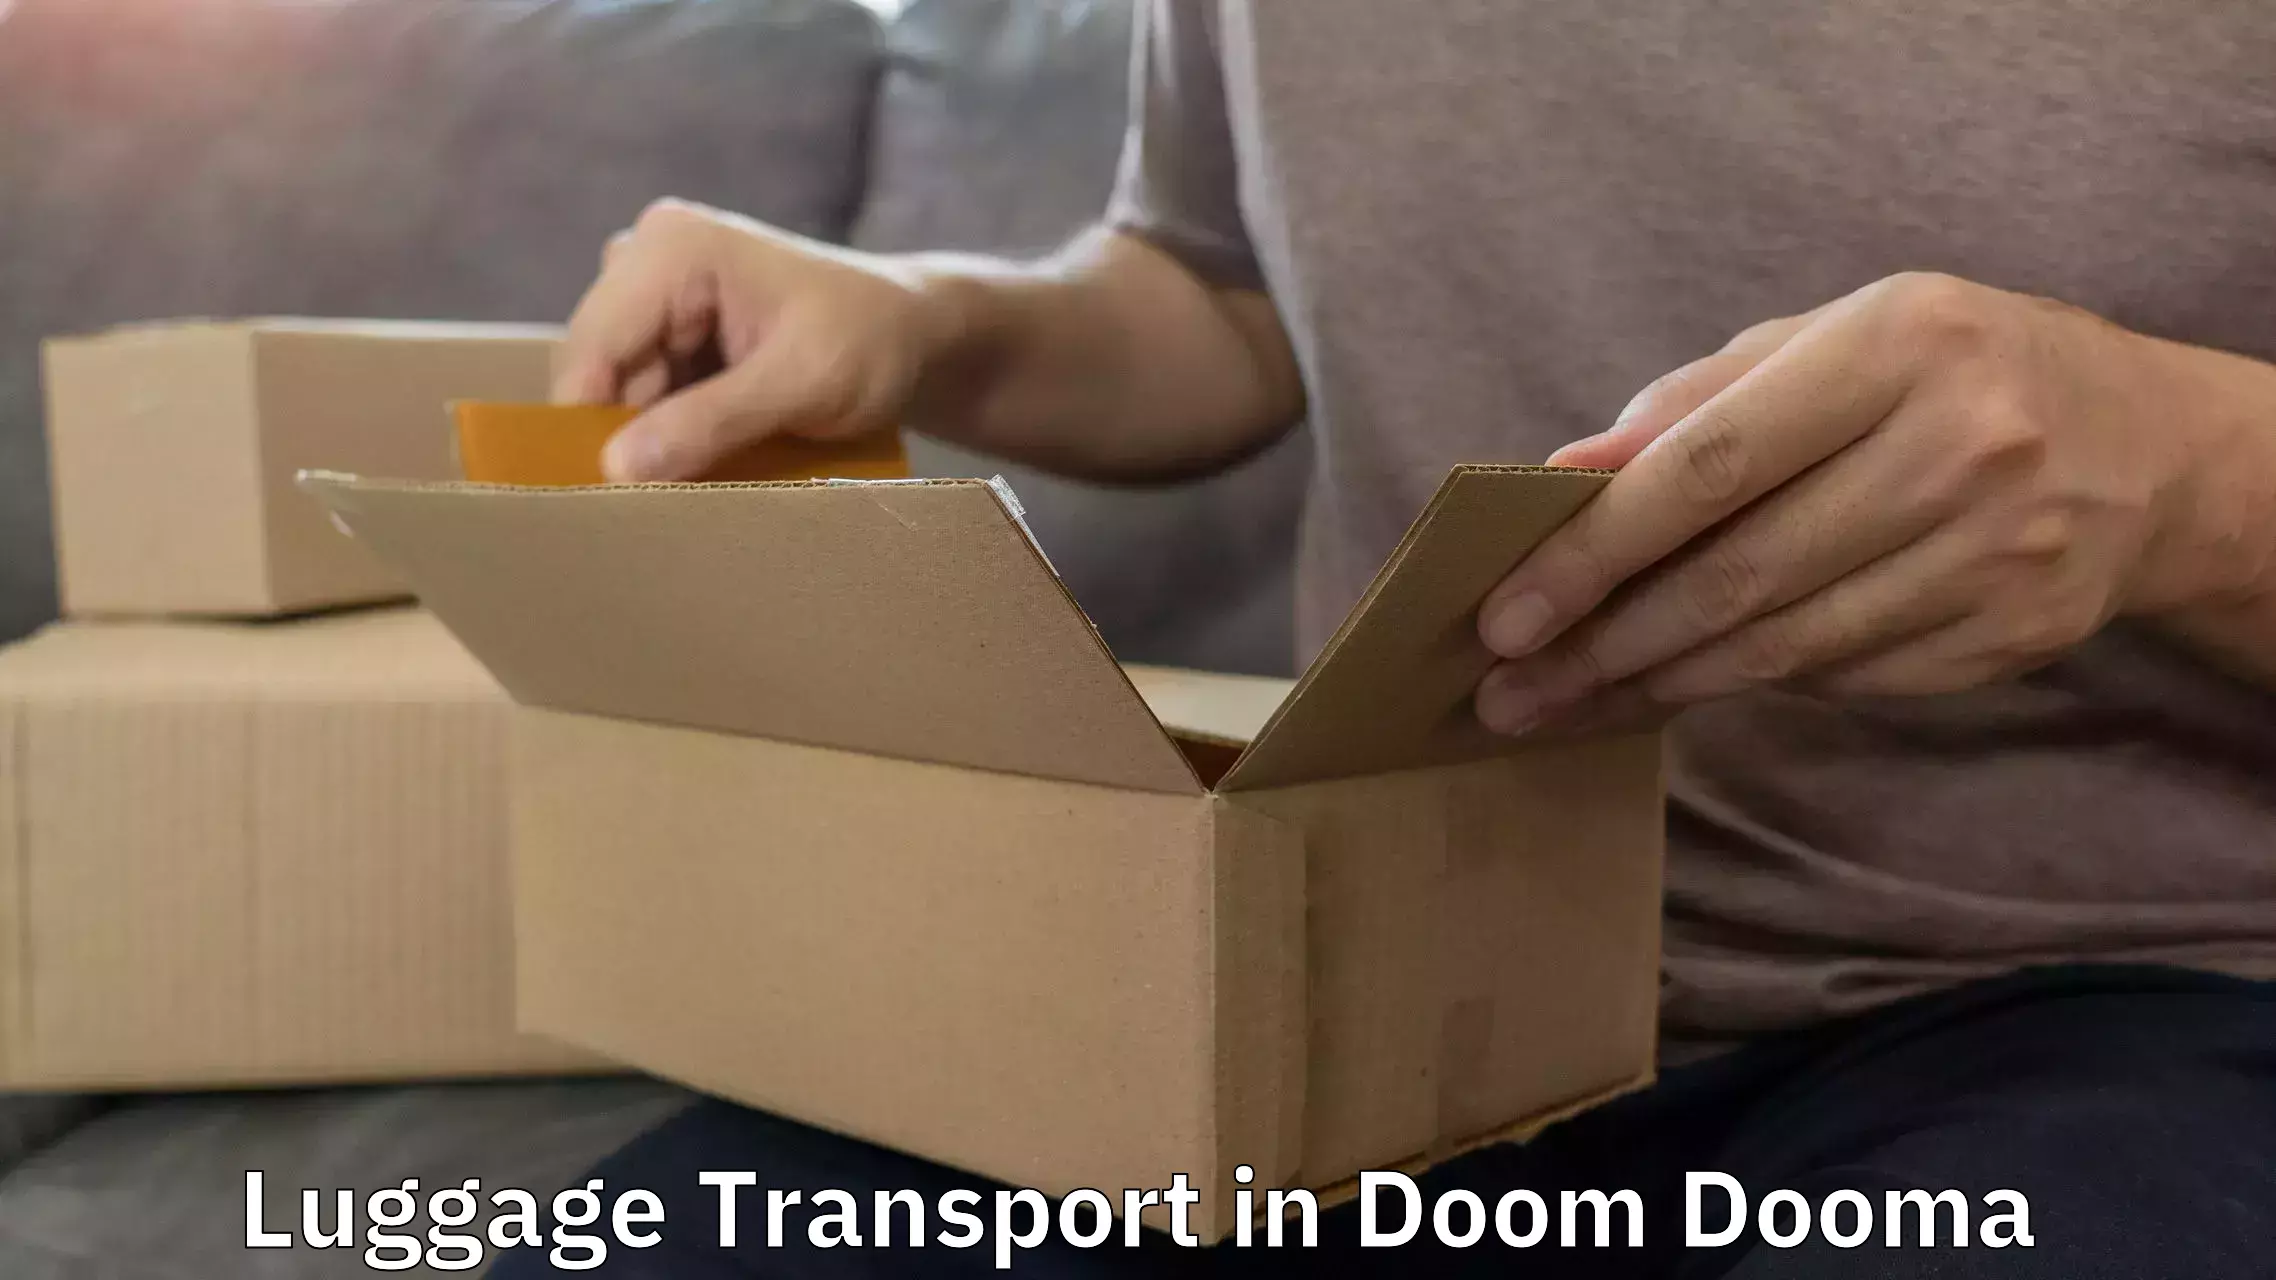 Baggage transport management in Doom Dooma